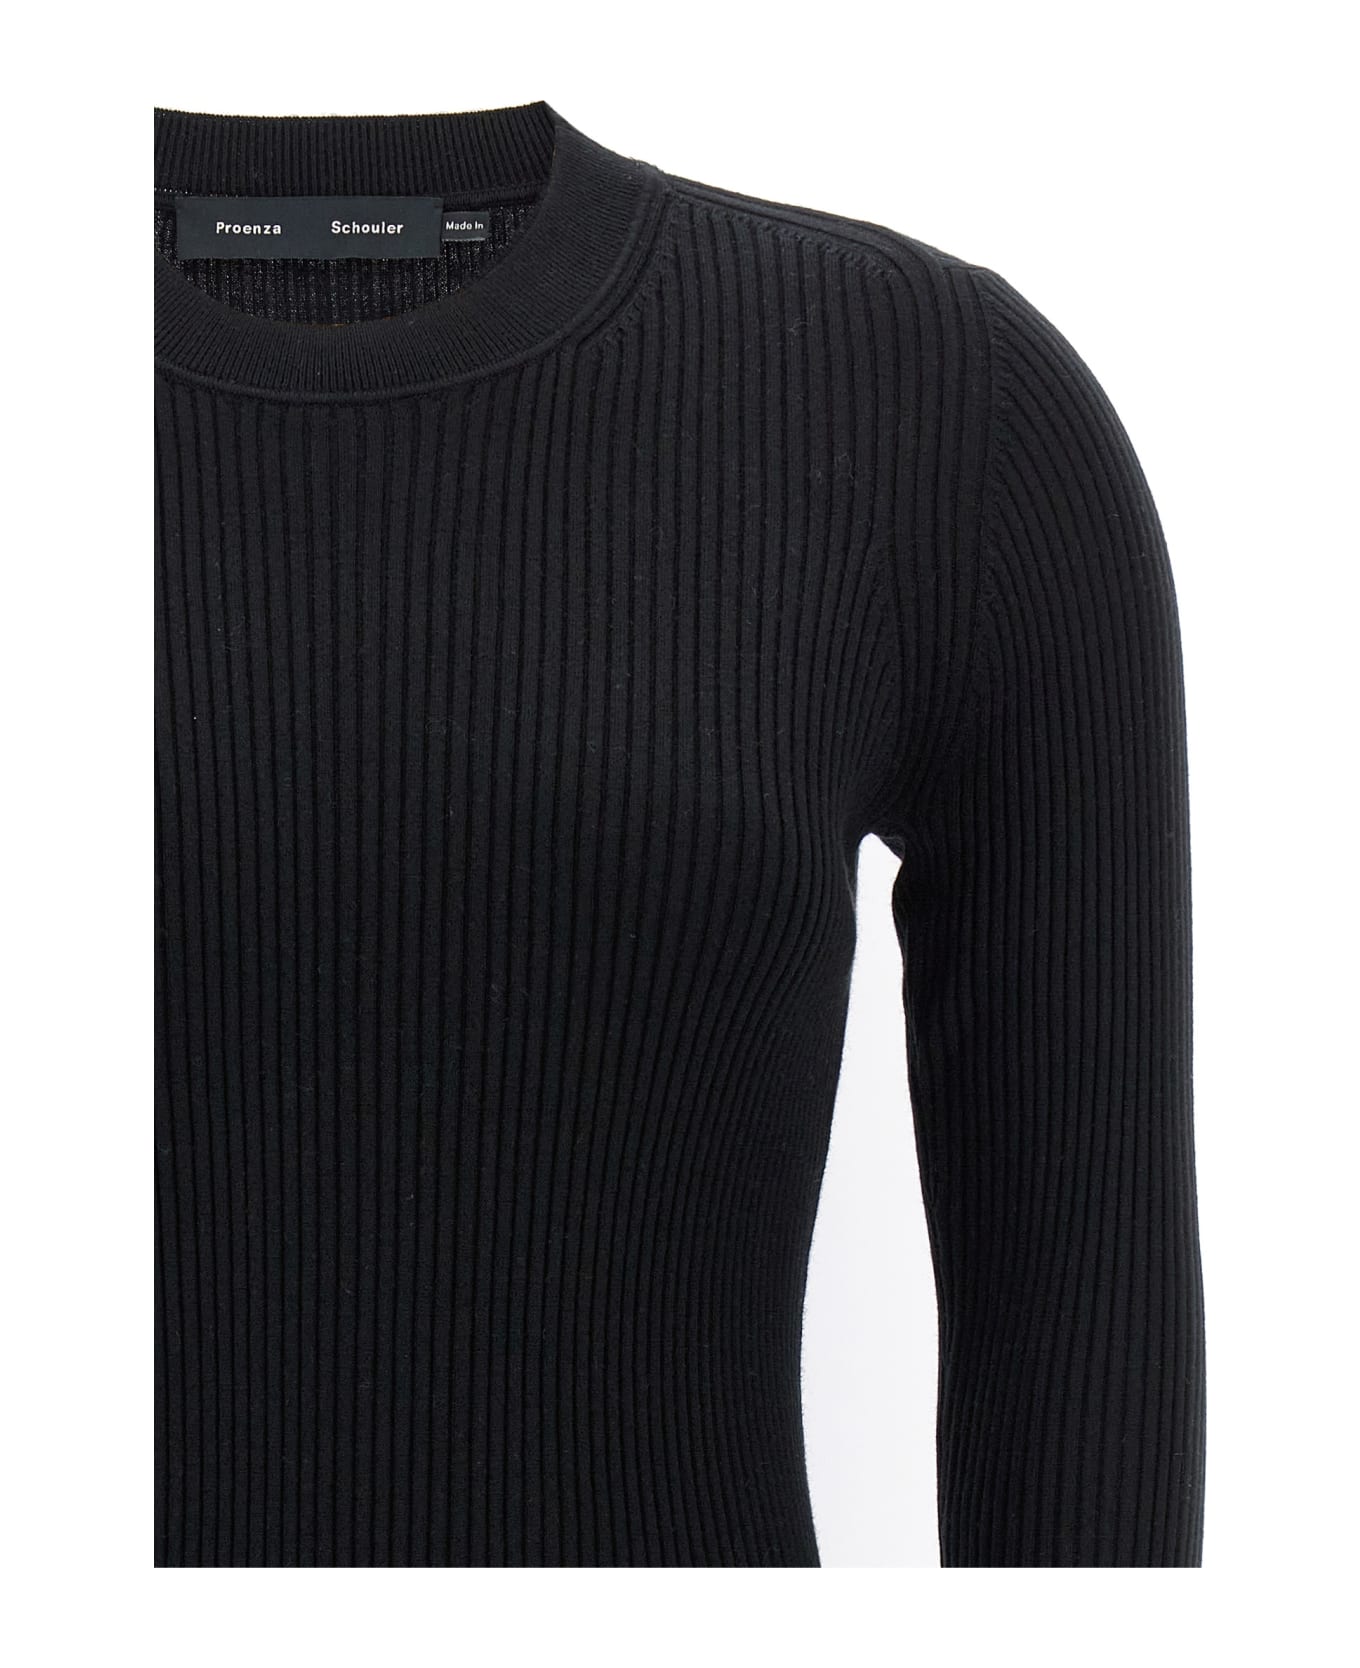 Proenza Schouler Ribbed Sweater - Black  